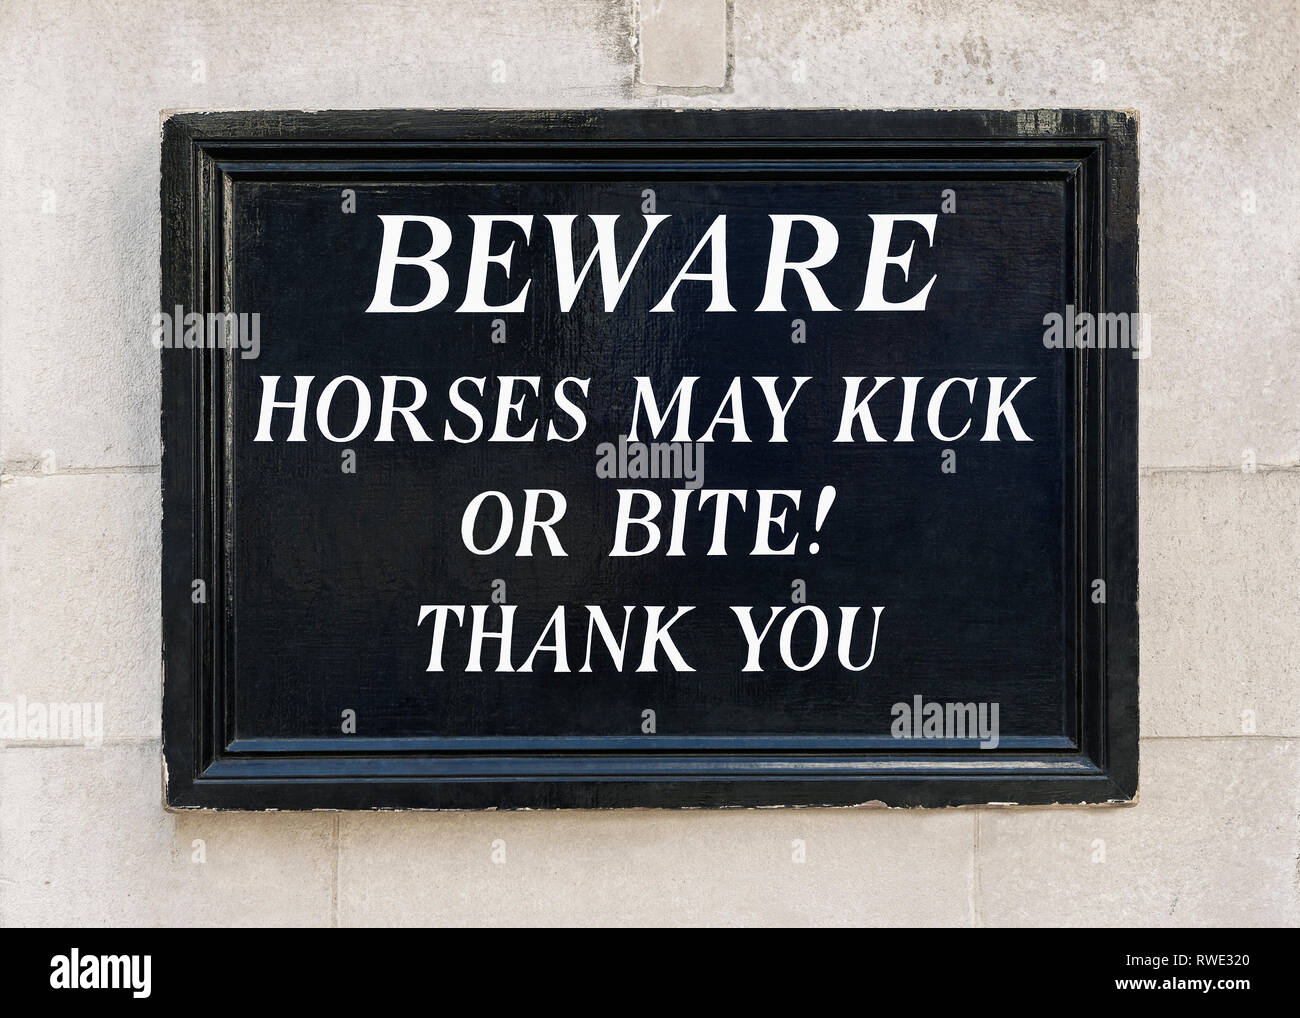 Beware Horses May Kick Or Bite Sign, Horse Guards Building, London, England, United Kingdom Stock Photo